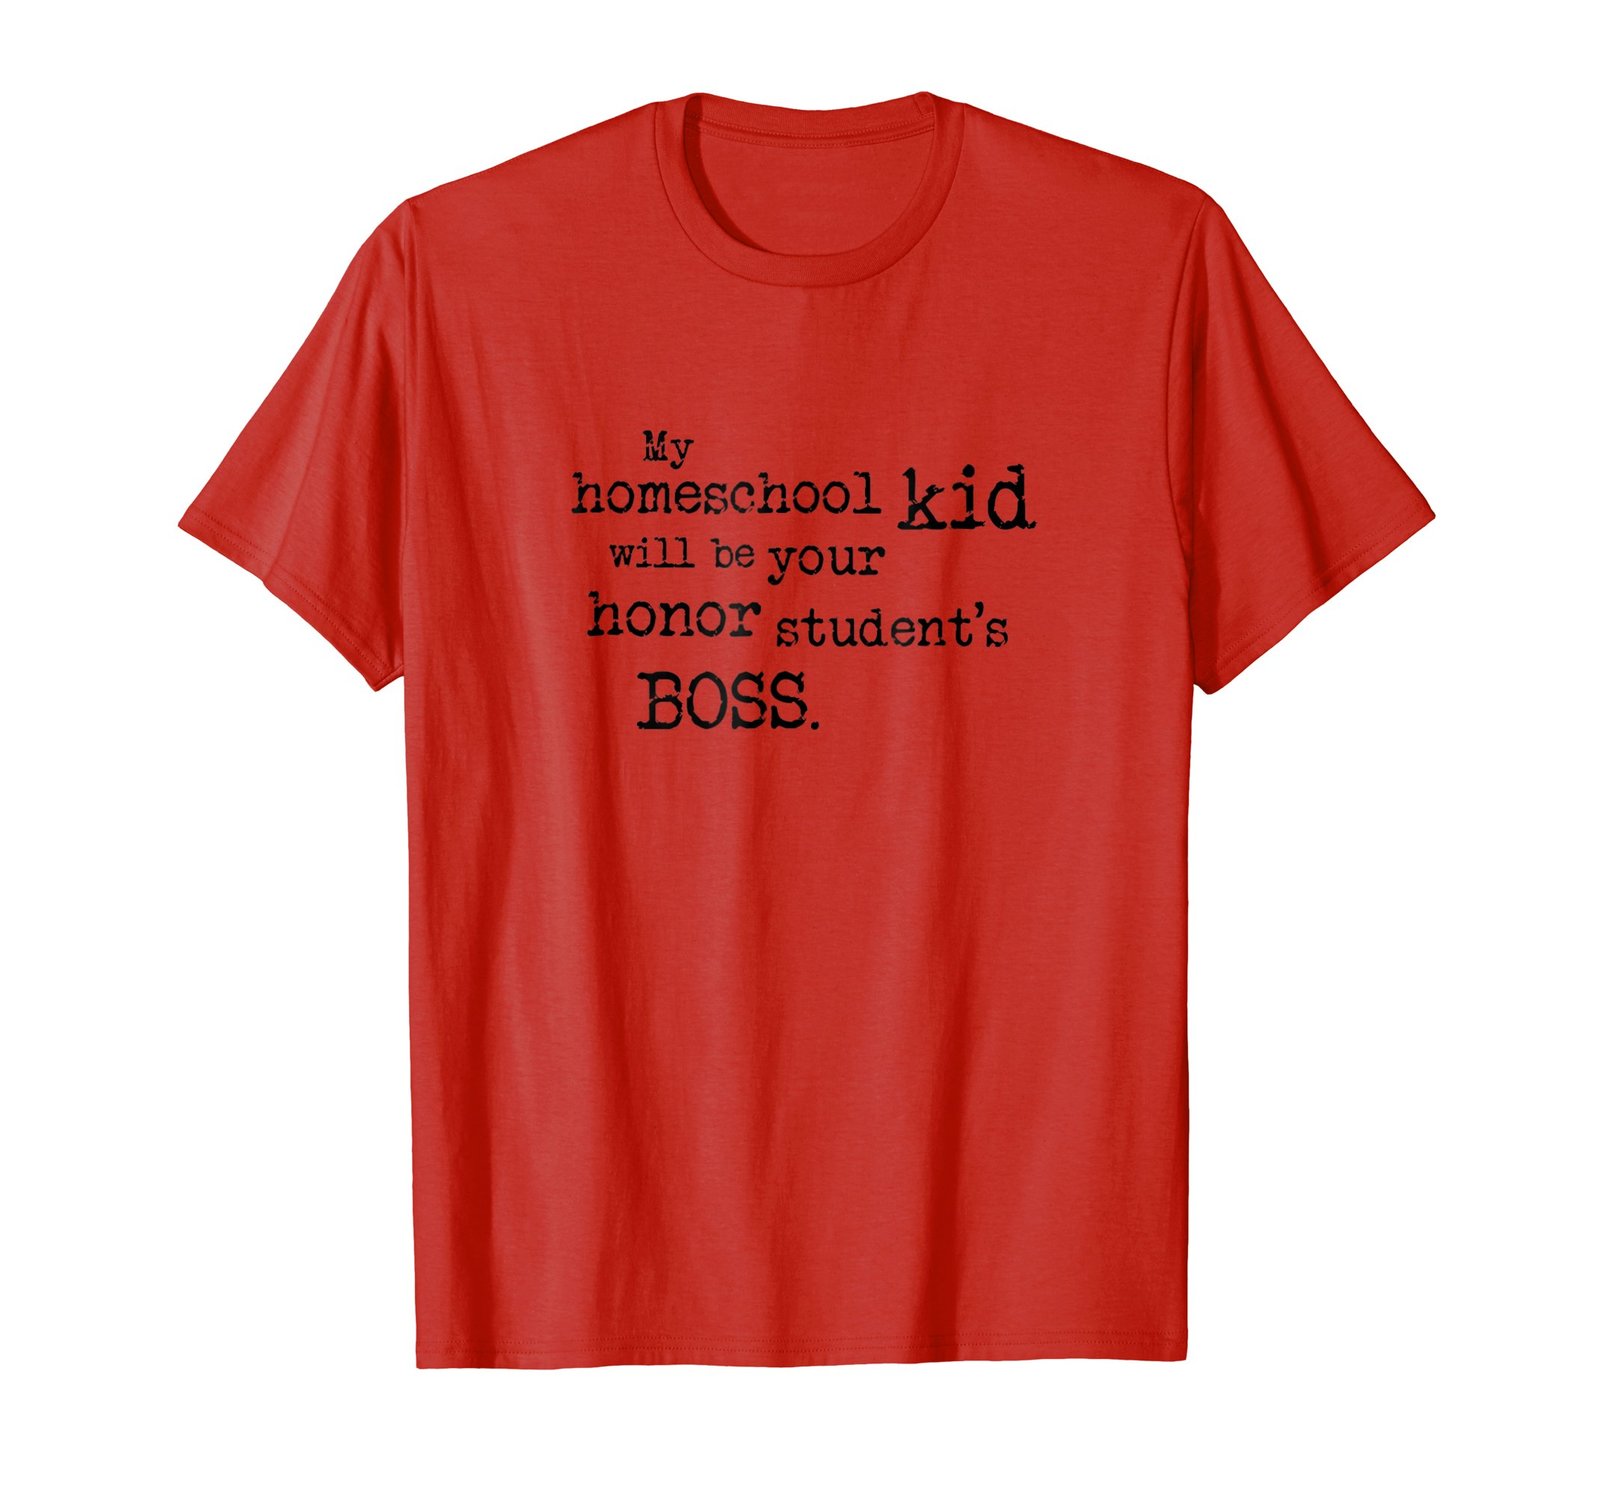 Funny Shirts - Homeschool Kid Honor Student Boss Funny Home-school T-Shirt Men